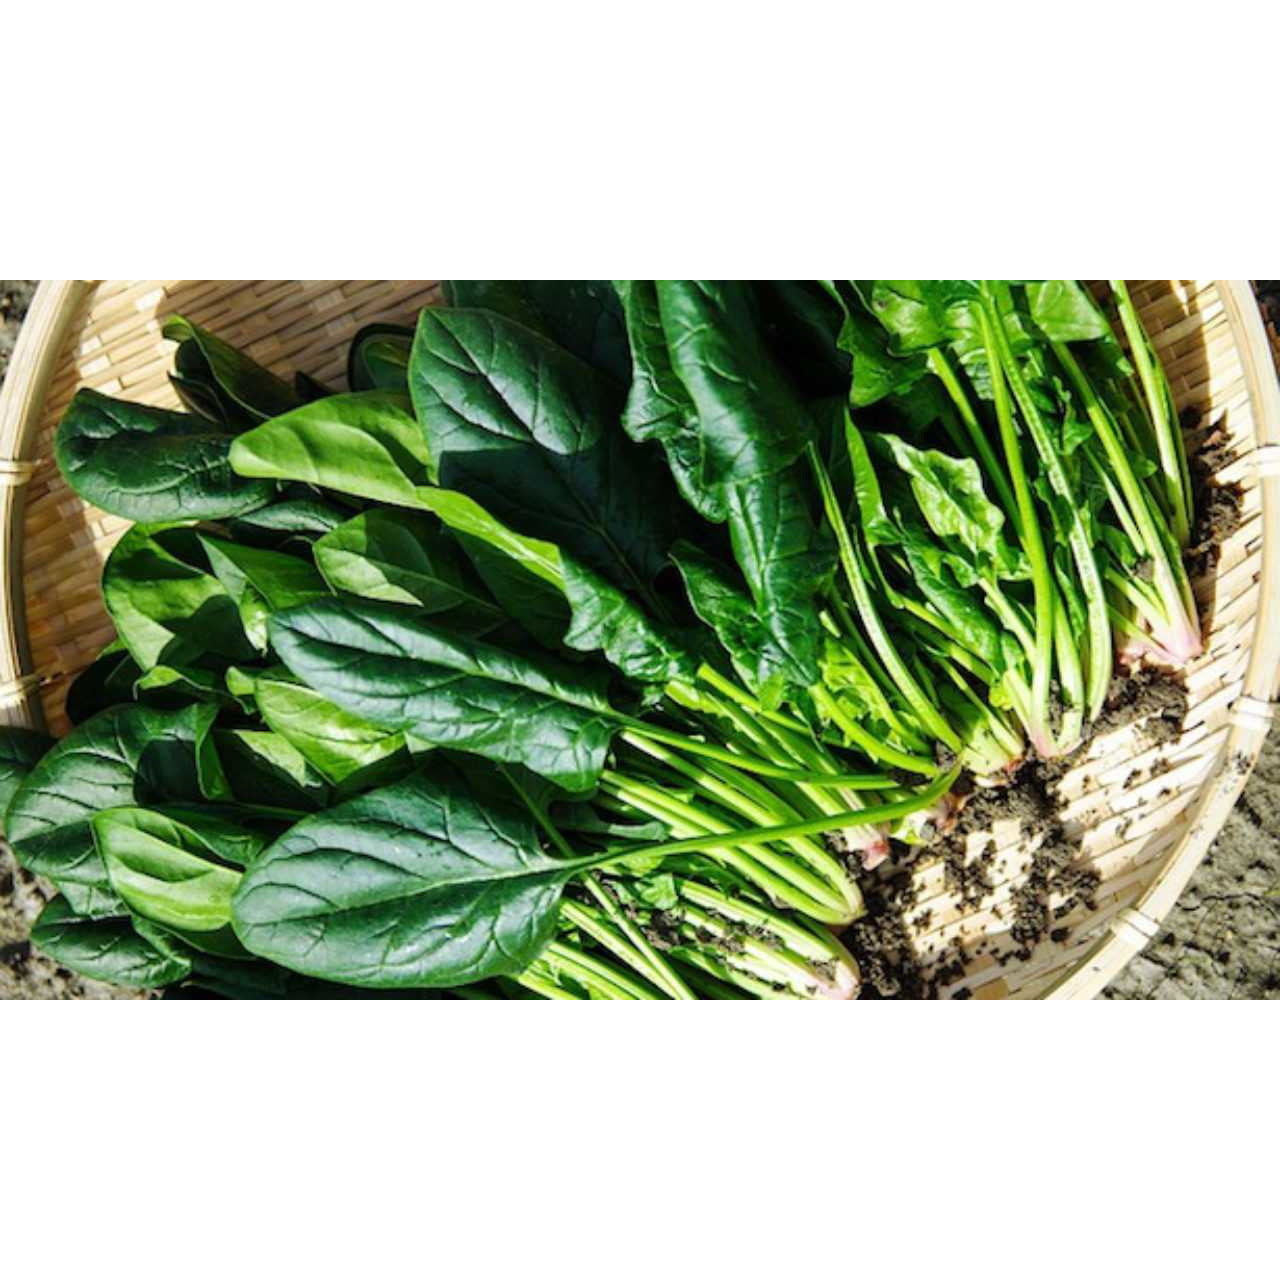 Acquista spinaci online con Frutt'it - Verdure fresche online